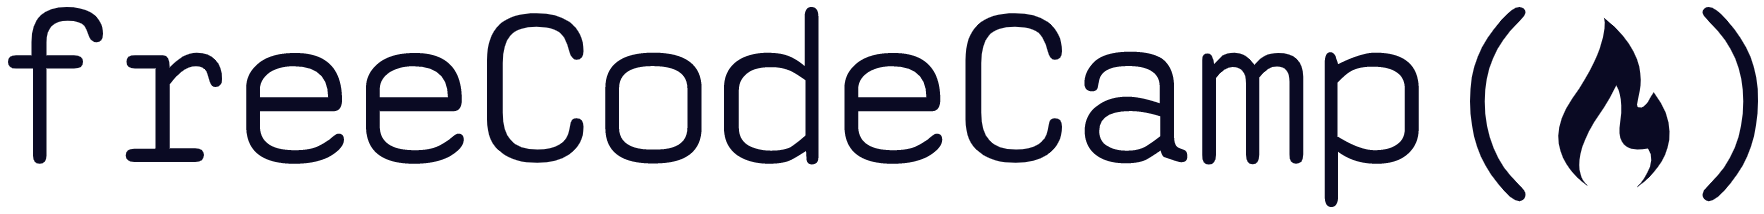 freeCodeCamp logo